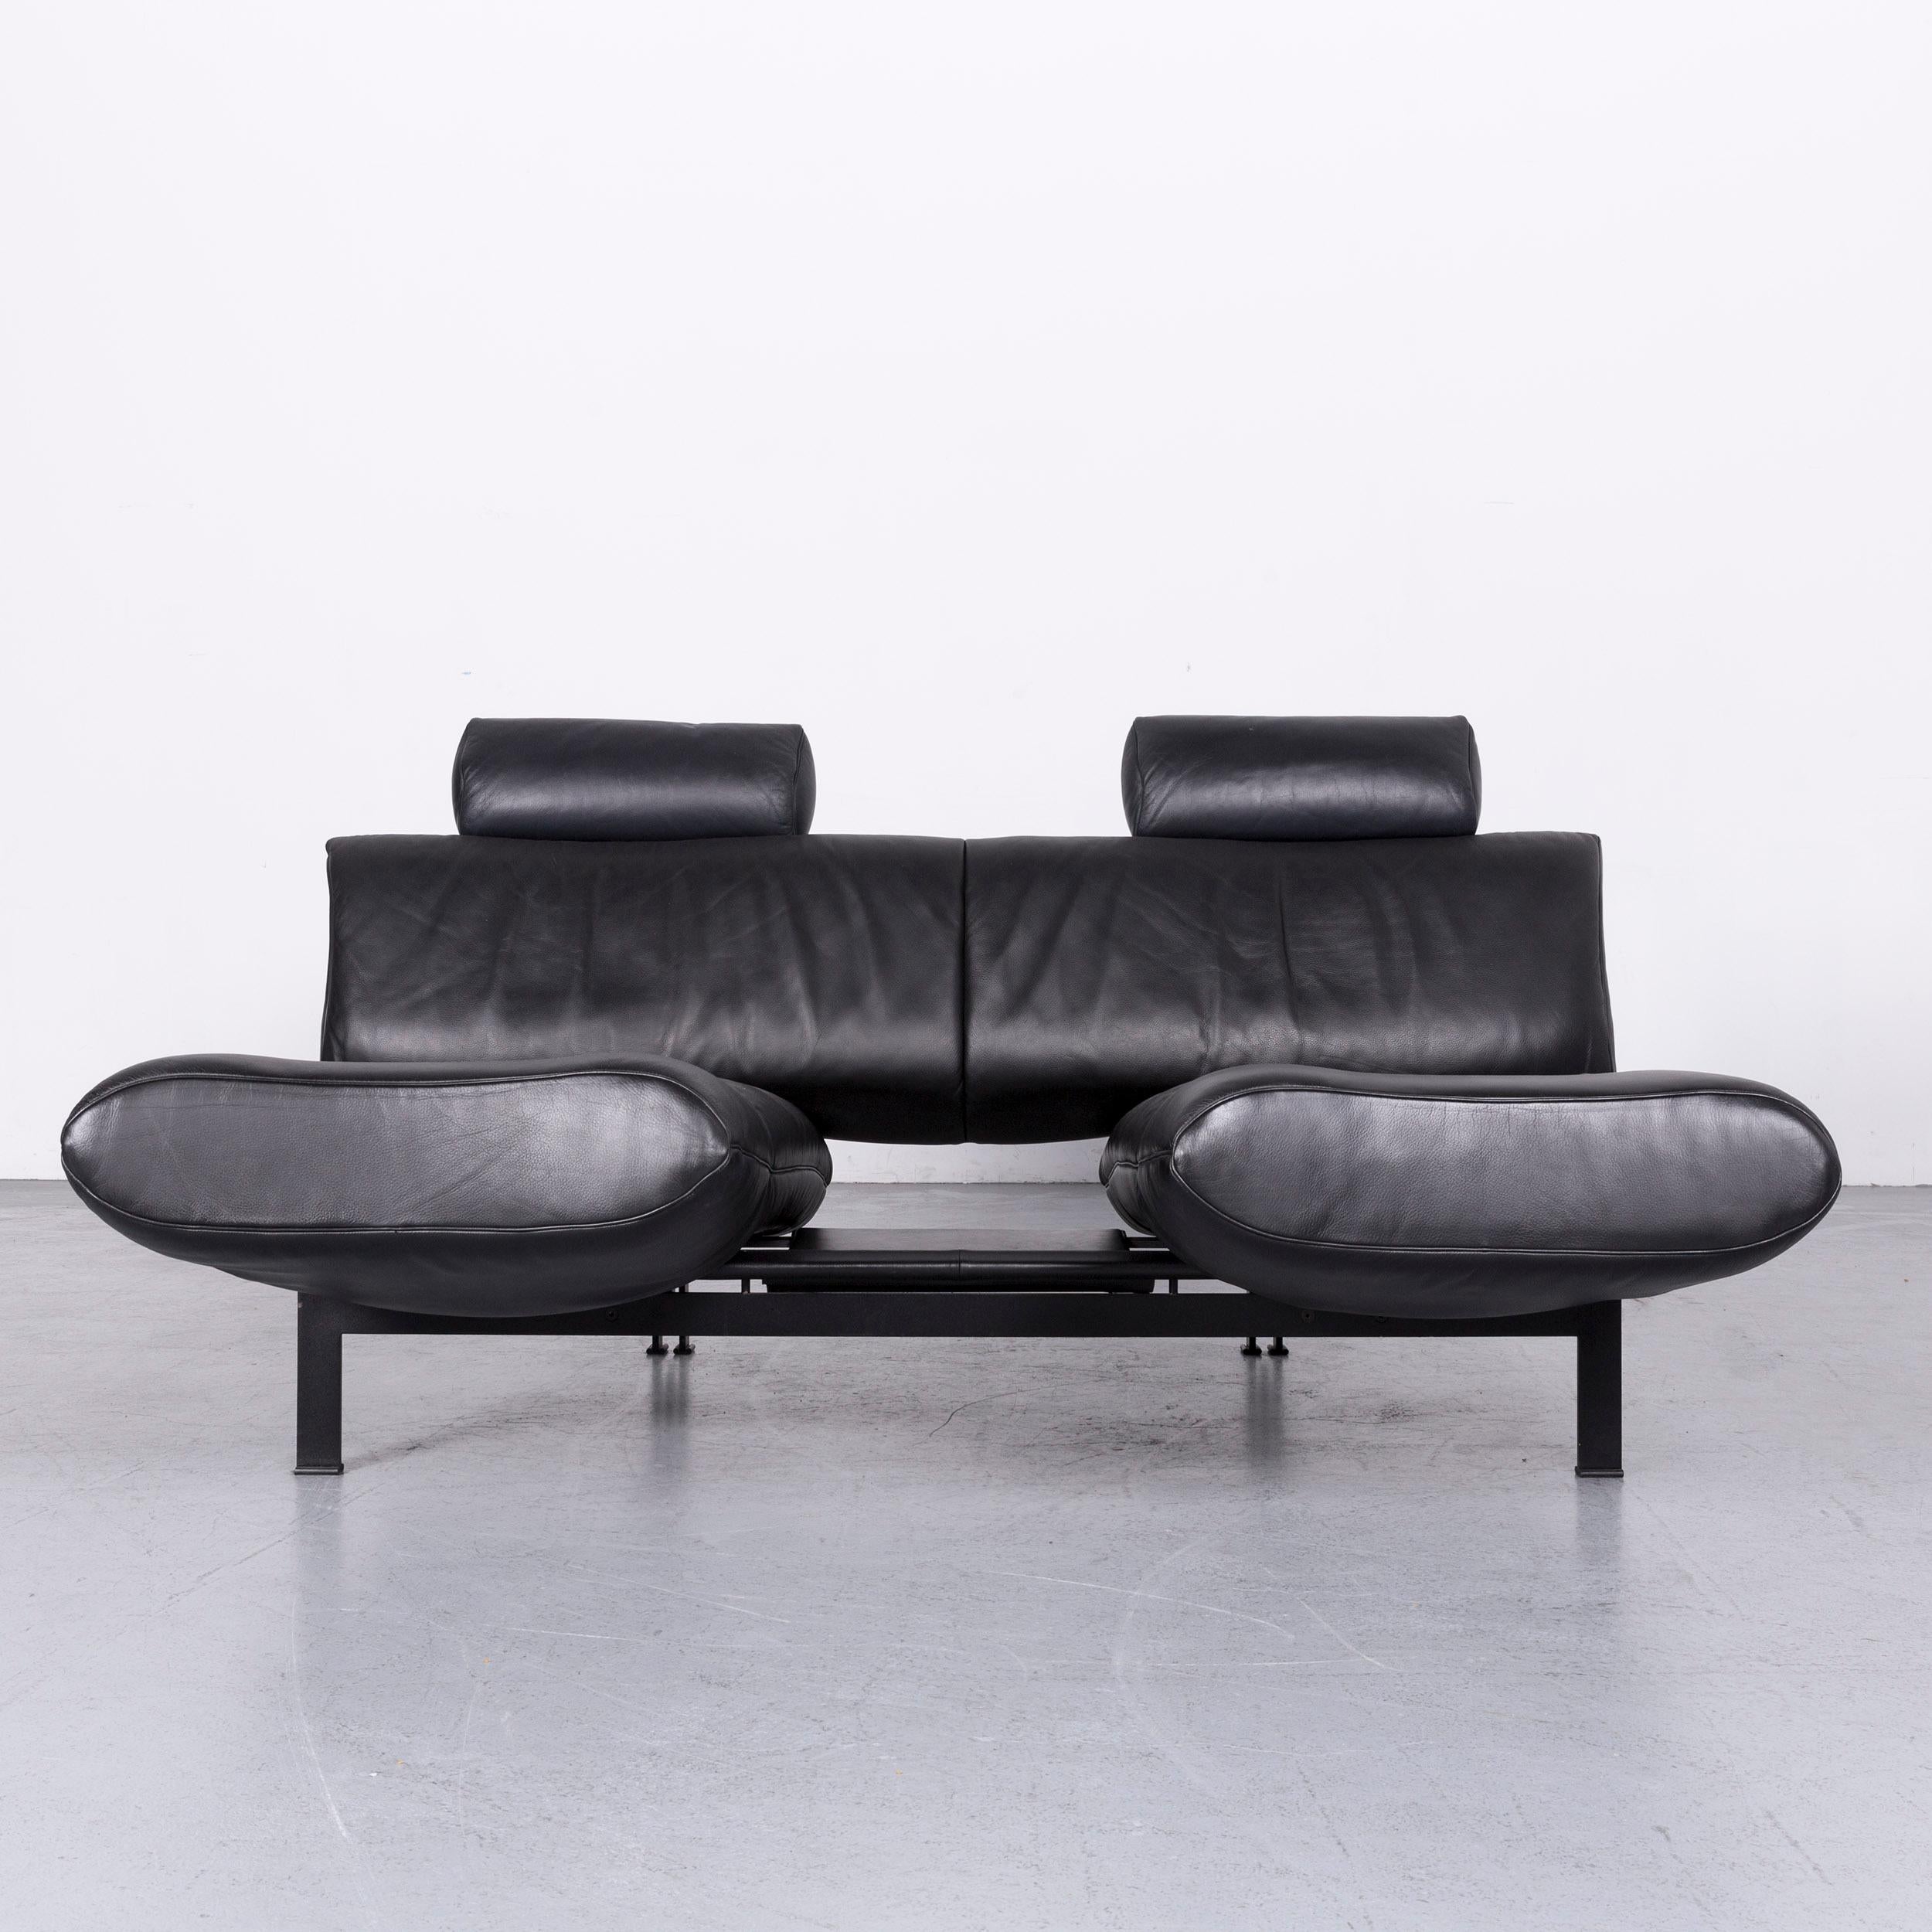 De Sede Ds 140 Designer Leather Sofa Black Three-Seat Function Modern For Sale 1